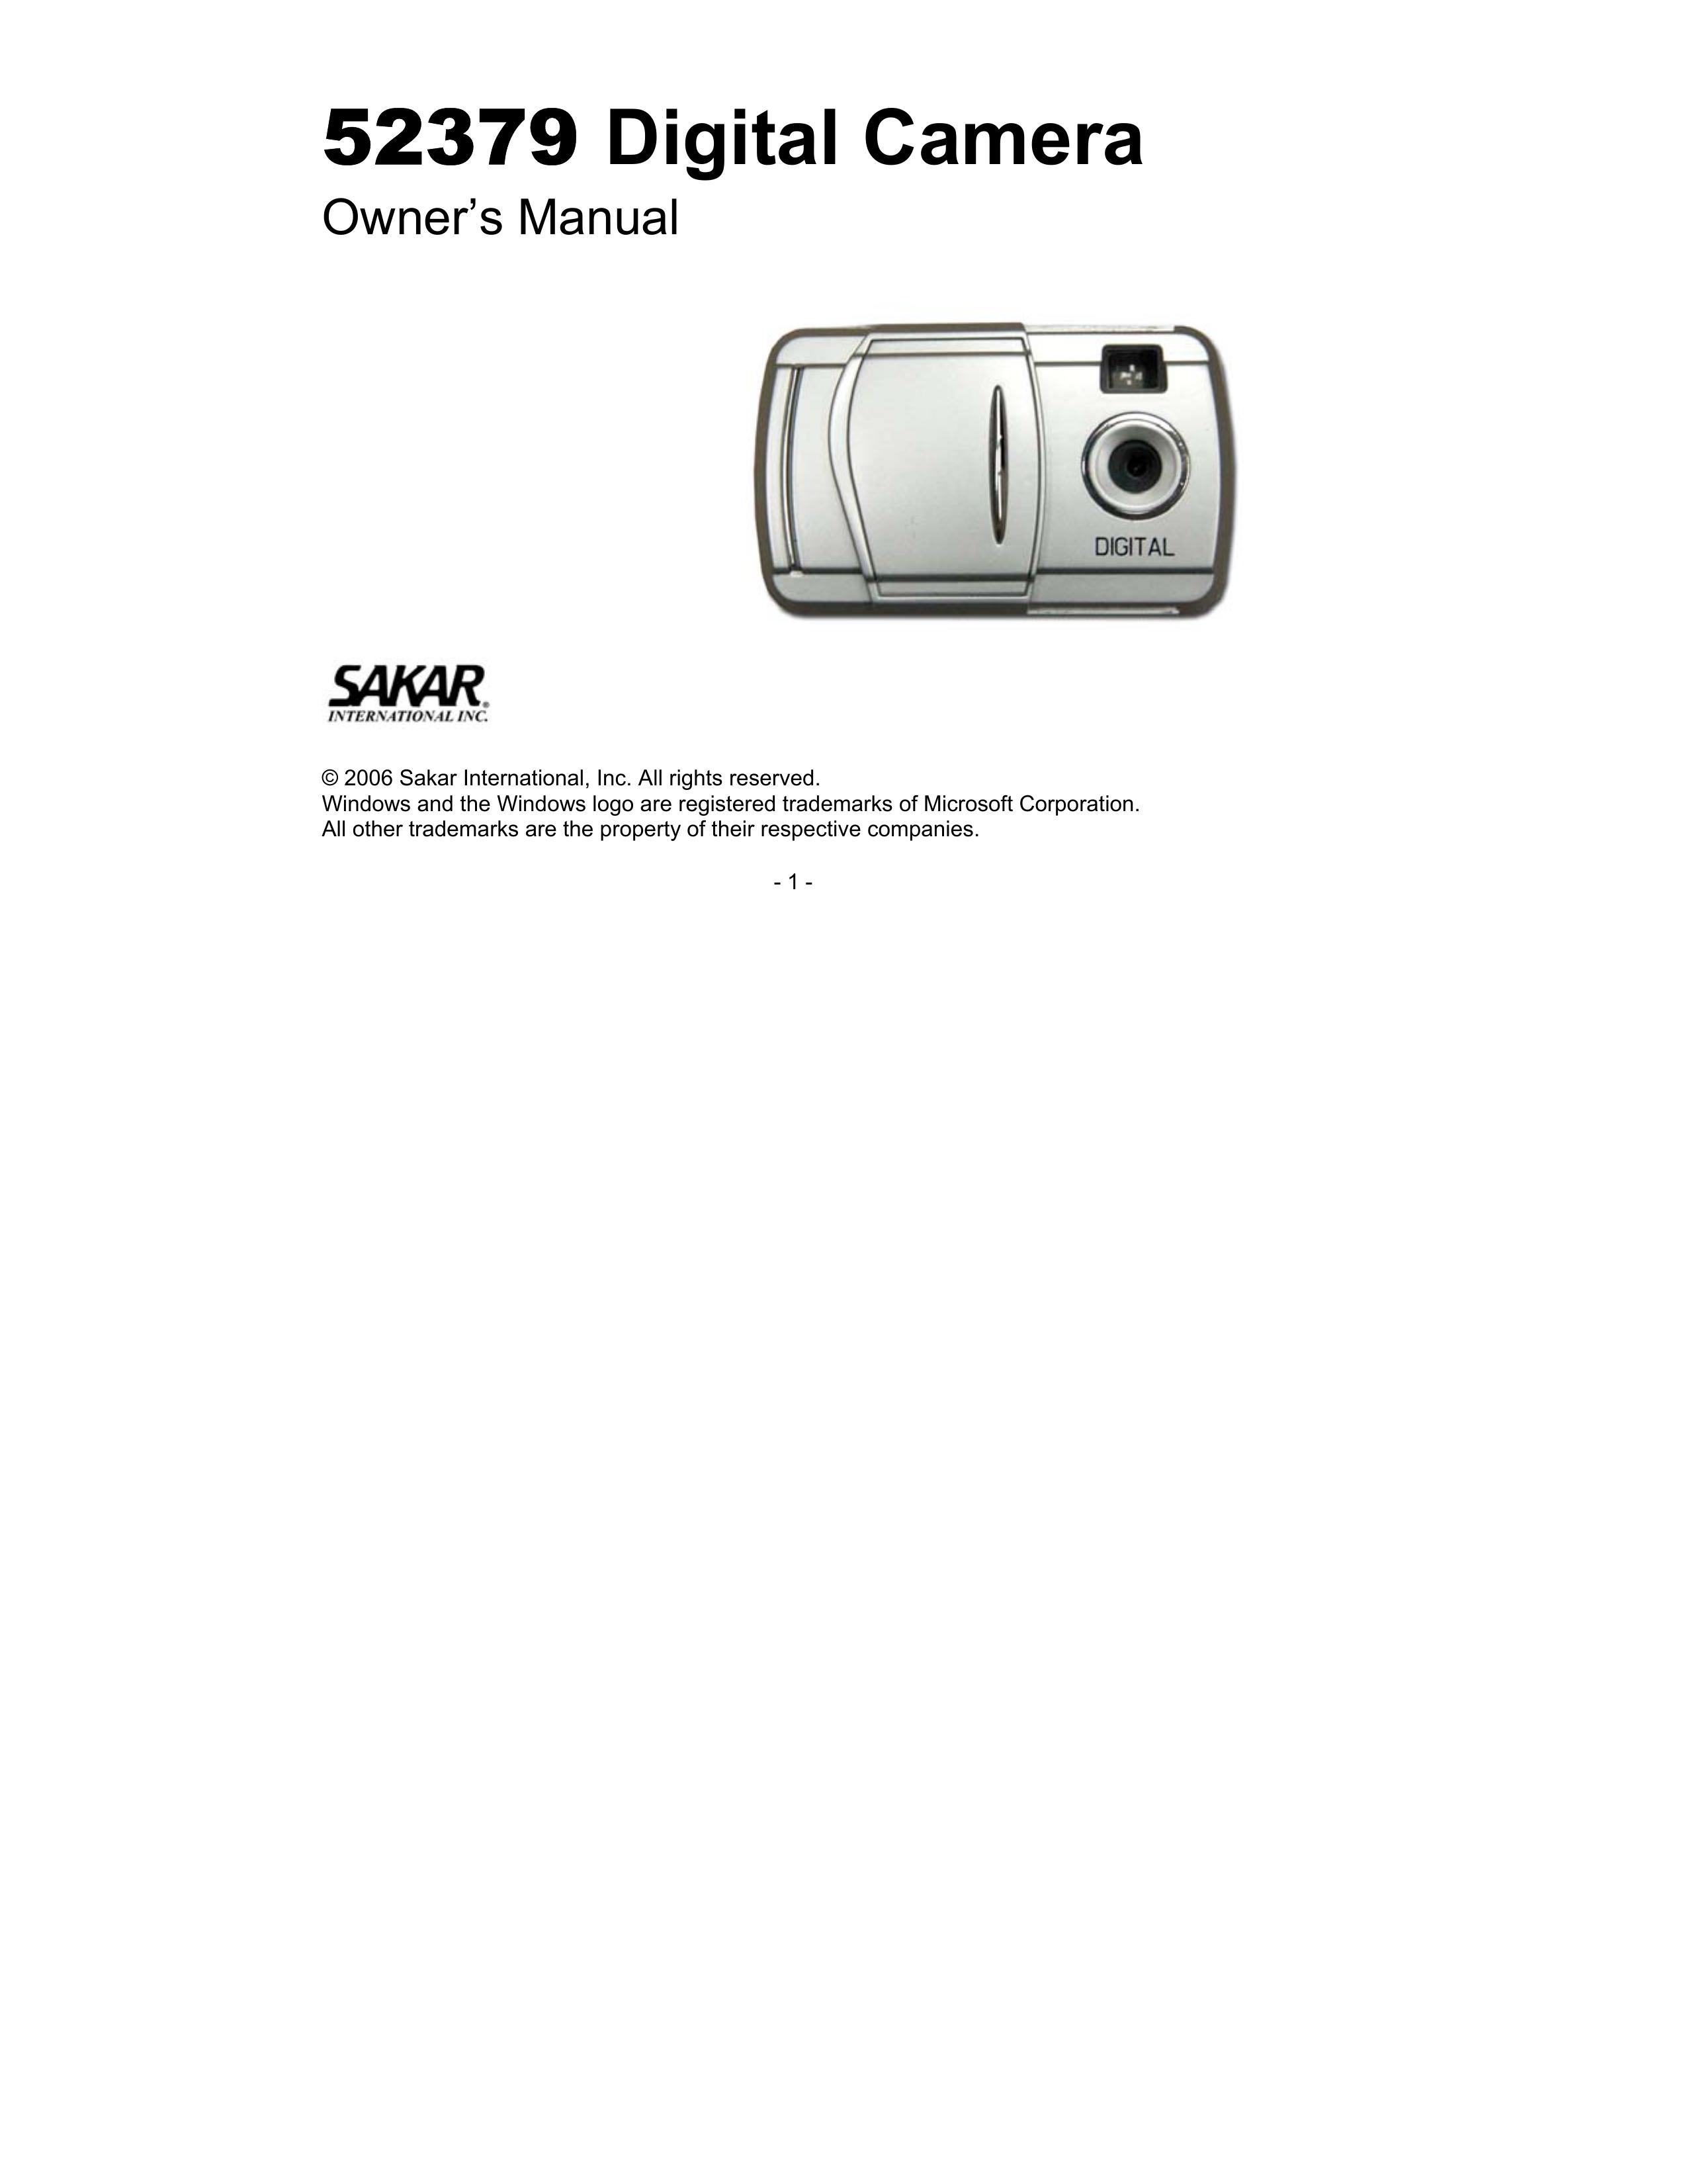 Sakar 52379 Digital Camera User Manual